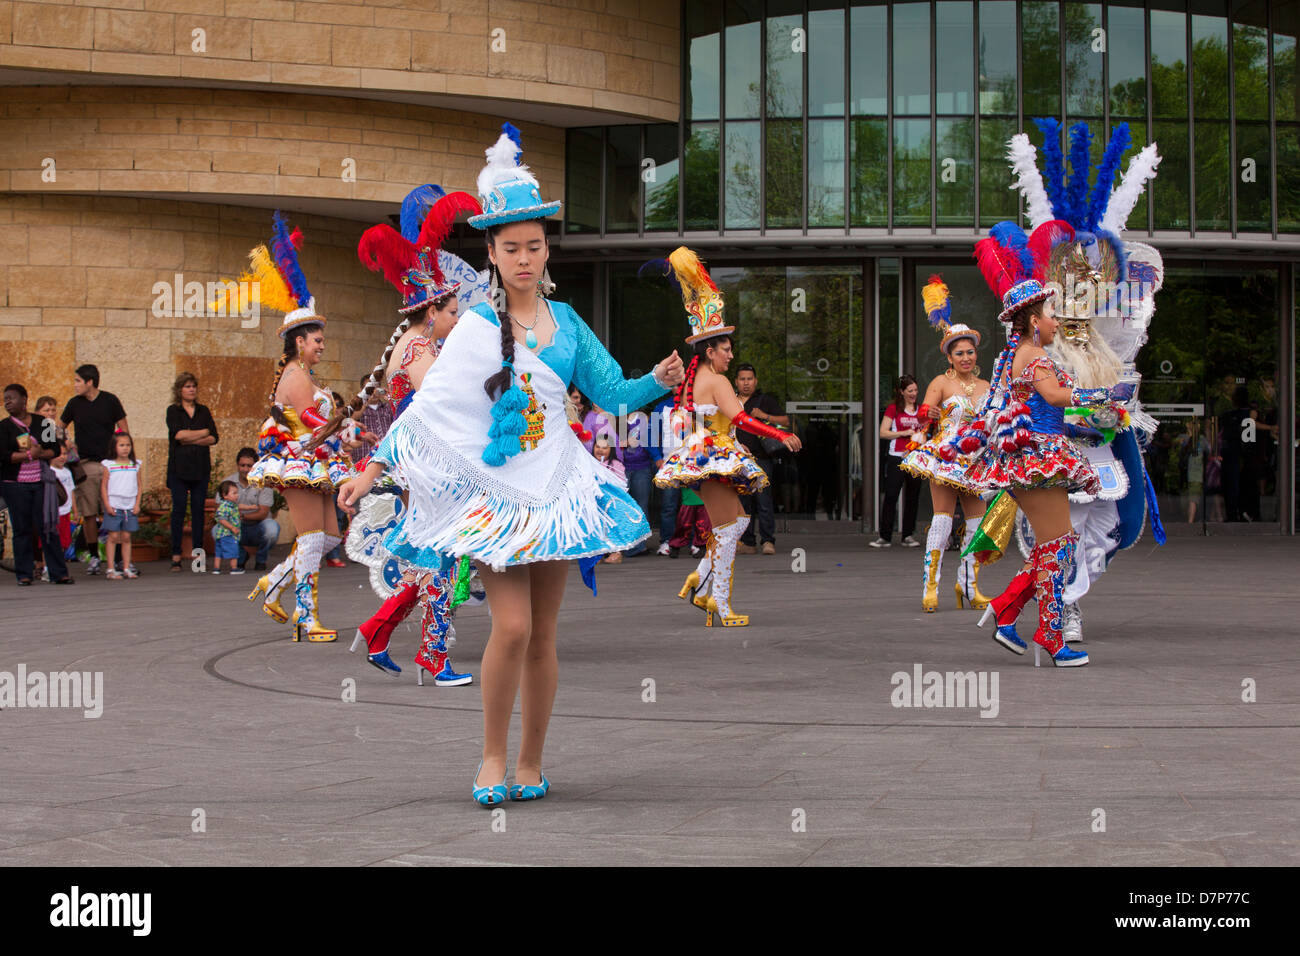 Bolivien traditionnel dancers performing - Washington, DC USA Banque D'Images